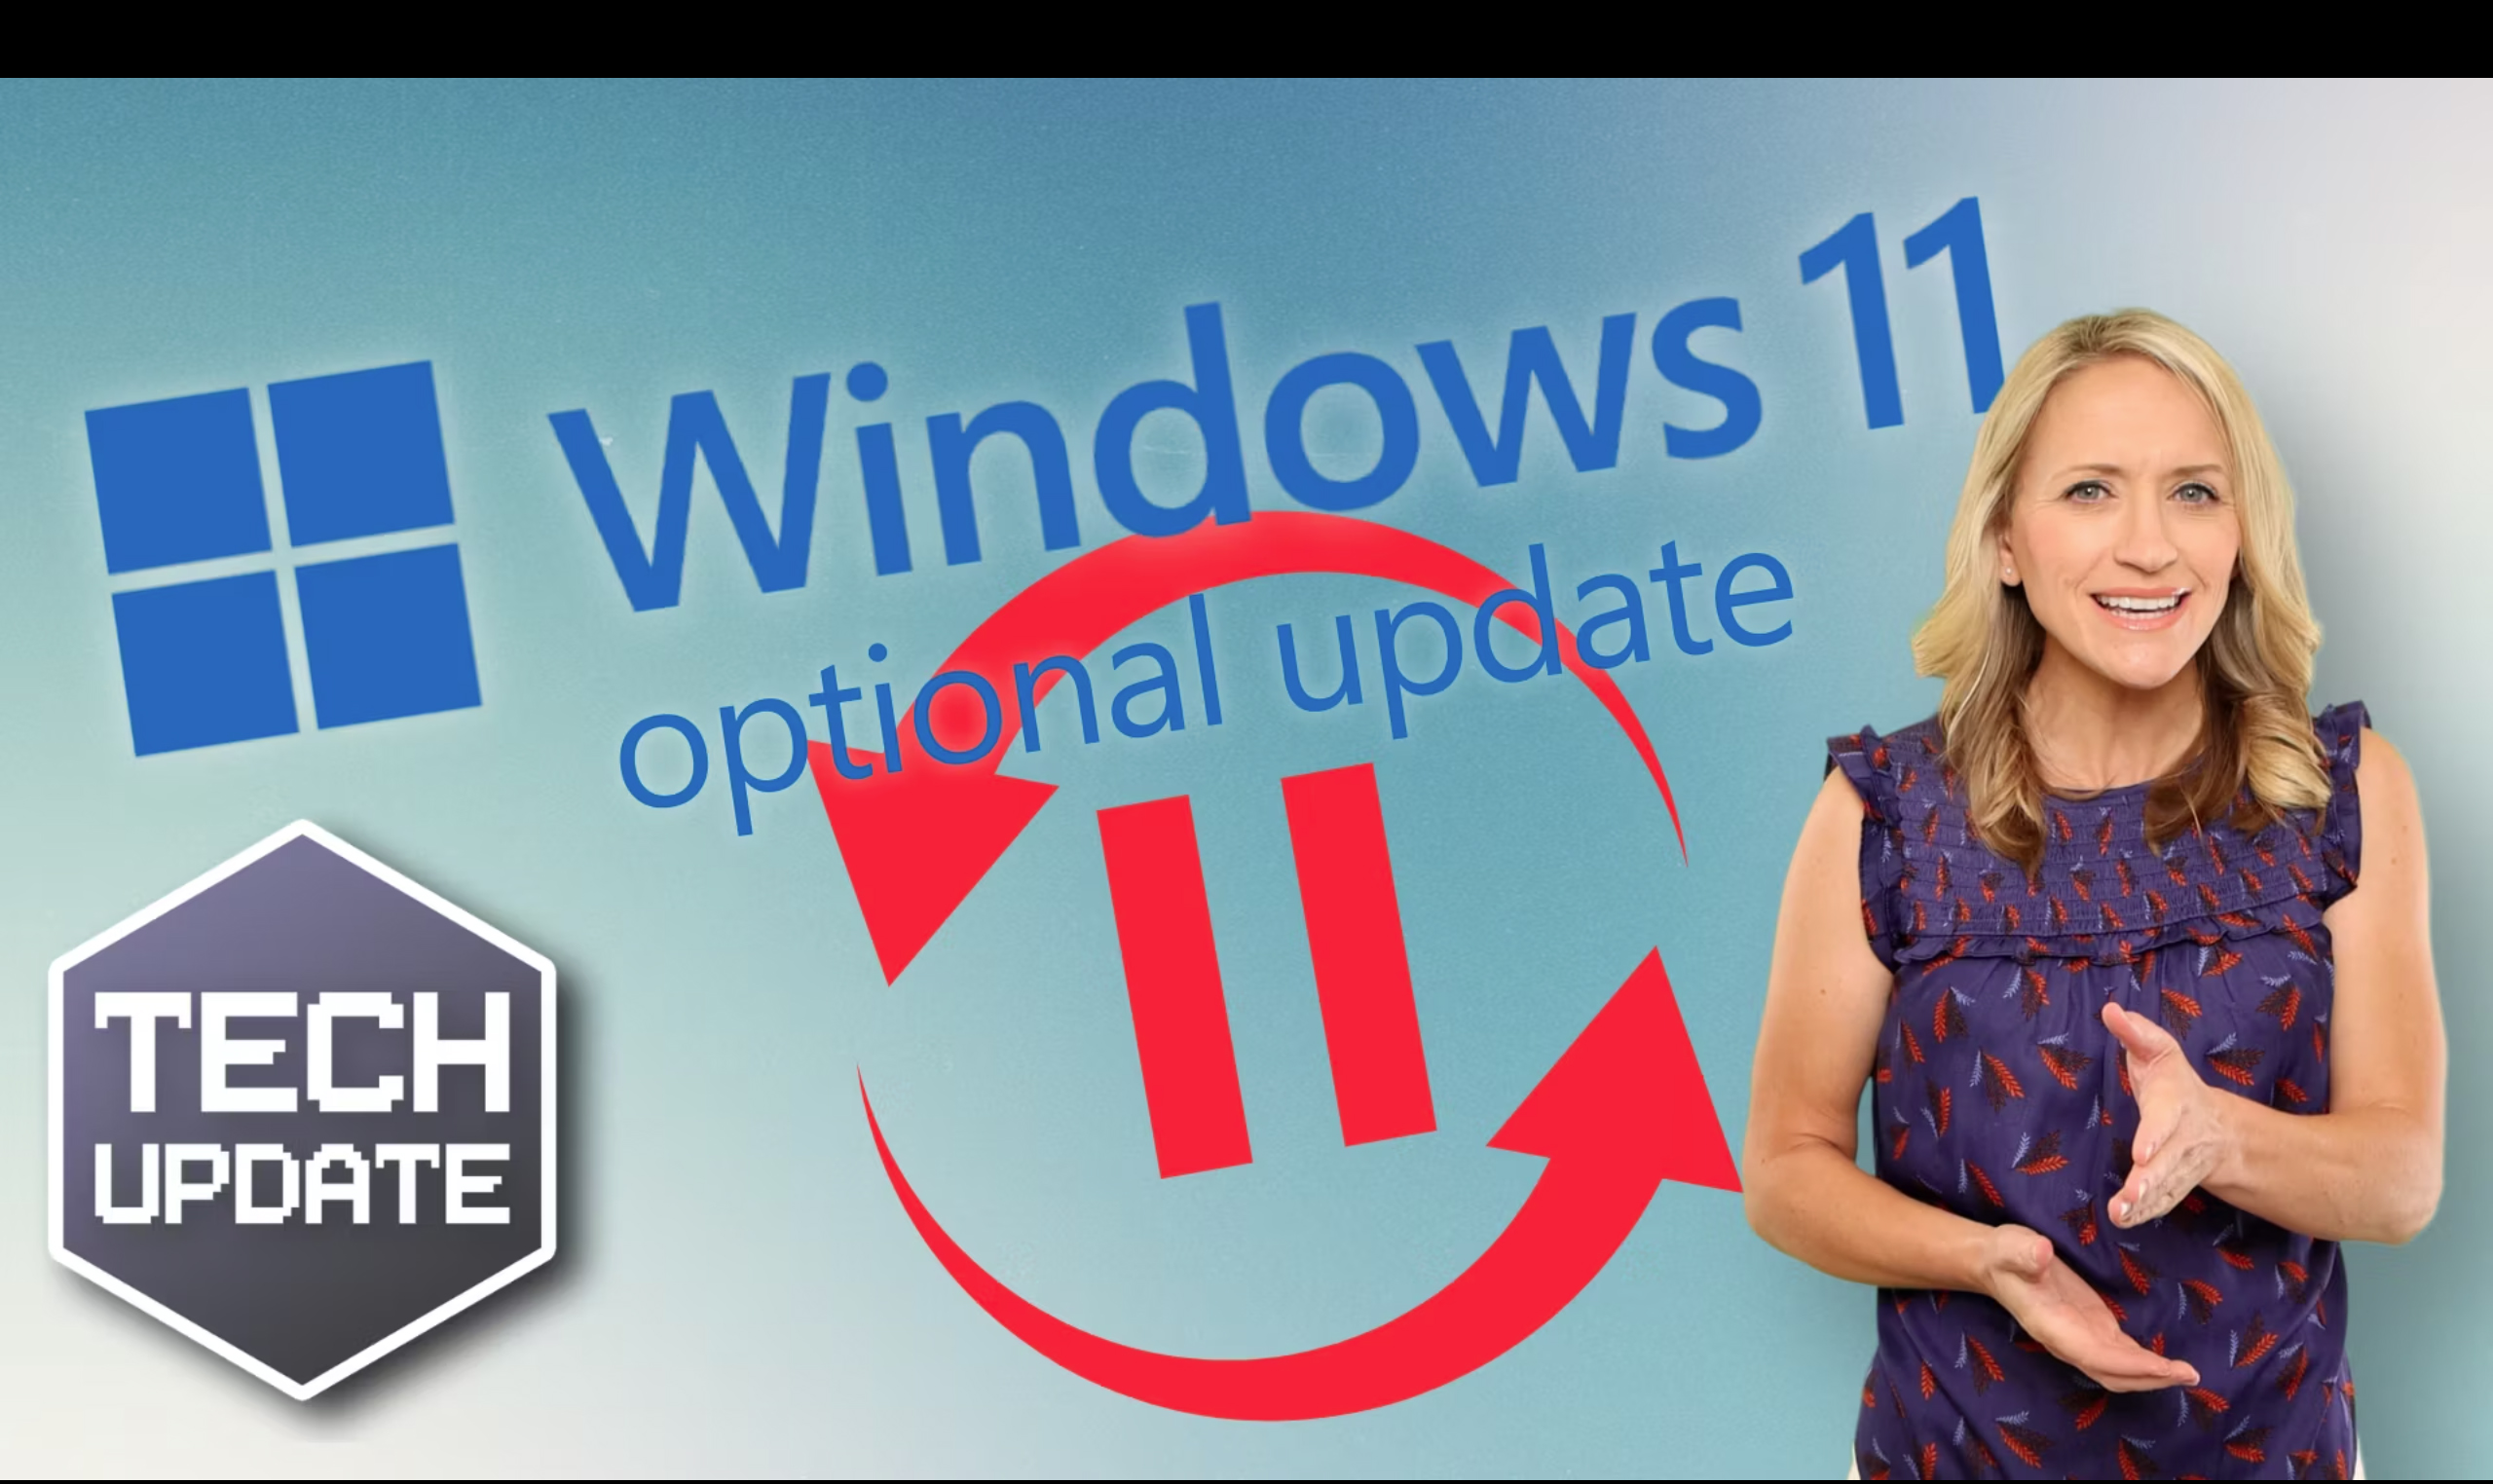 Windows 11 optional update